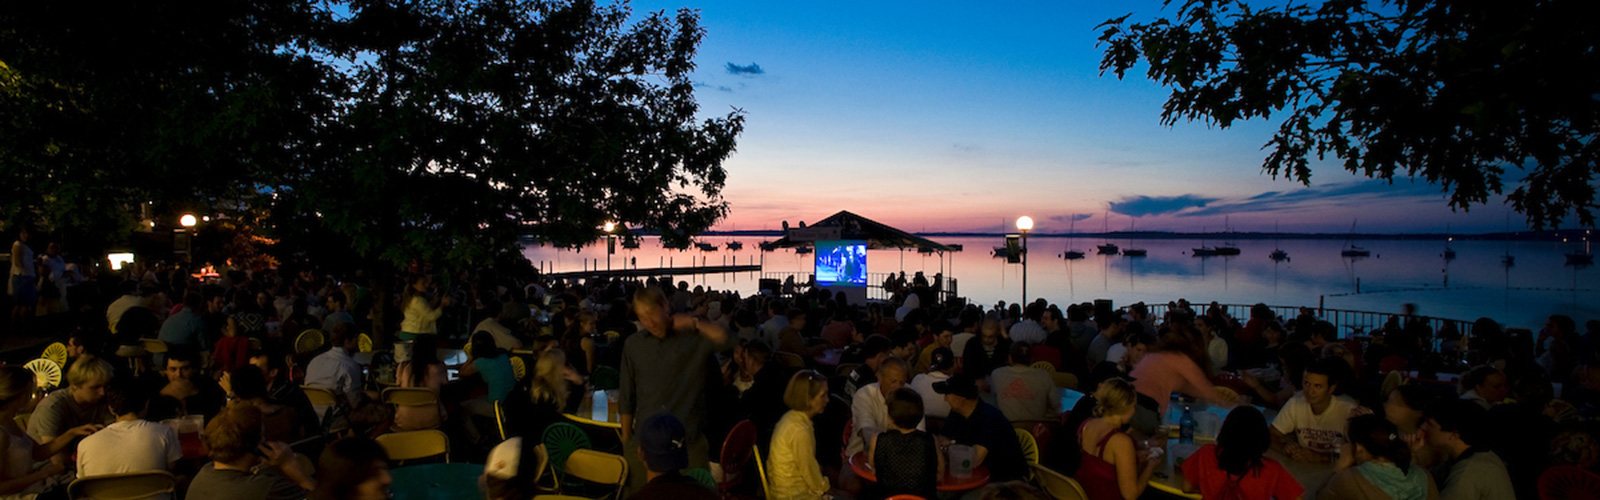 Lakeside cinema at the terrace